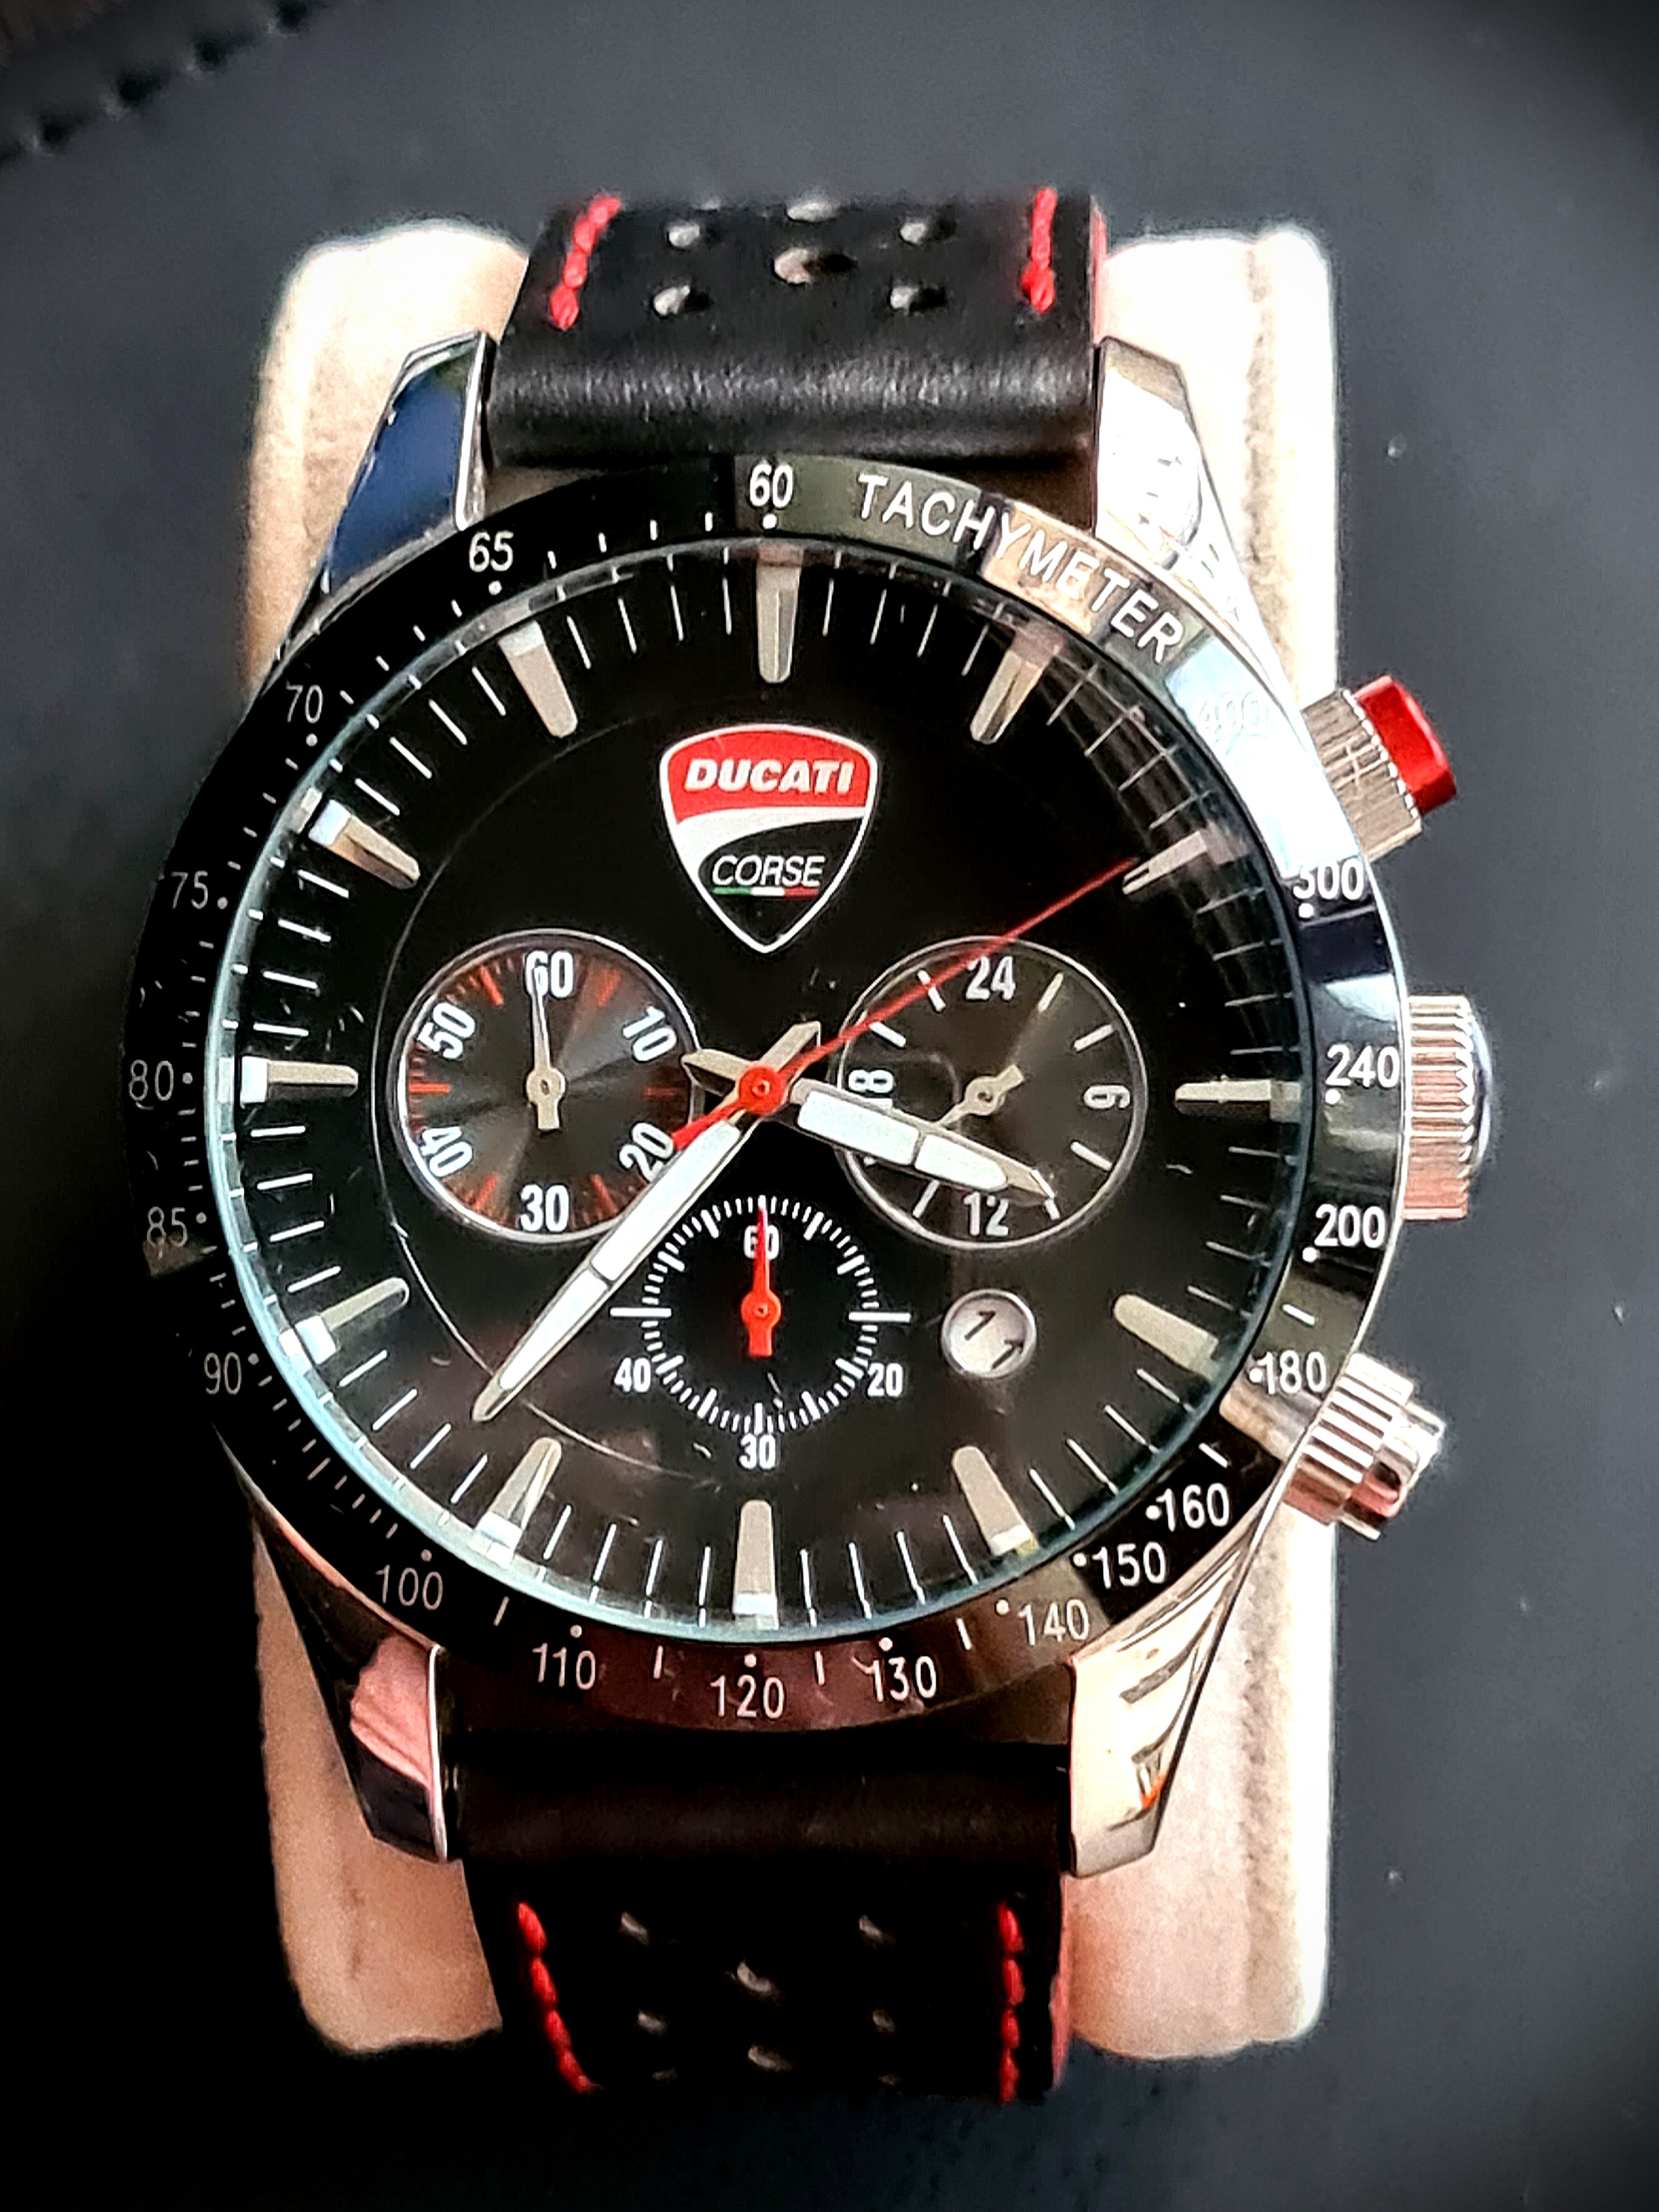 Ducati Corse Chronograph Watch WatchCharts 